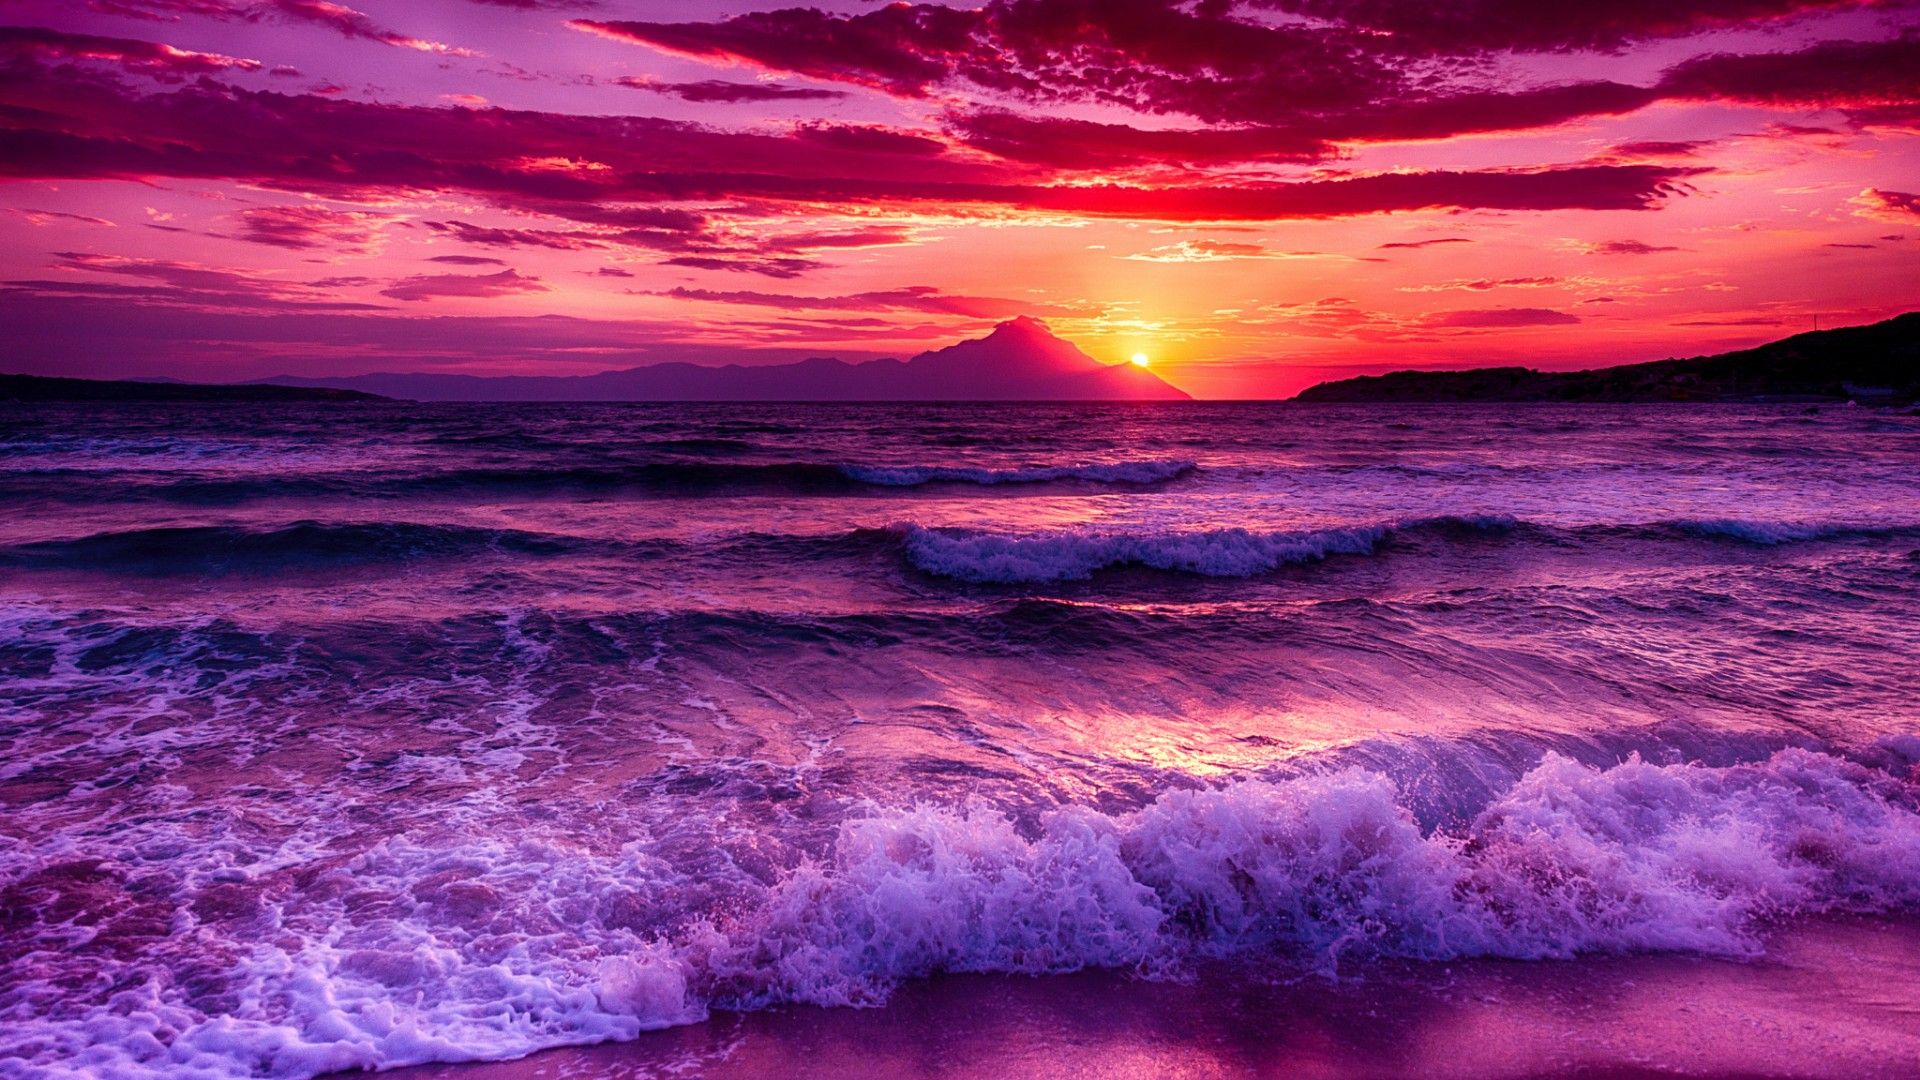  Romantic Purple Sunset Wallpapers Download at WallpaperBro